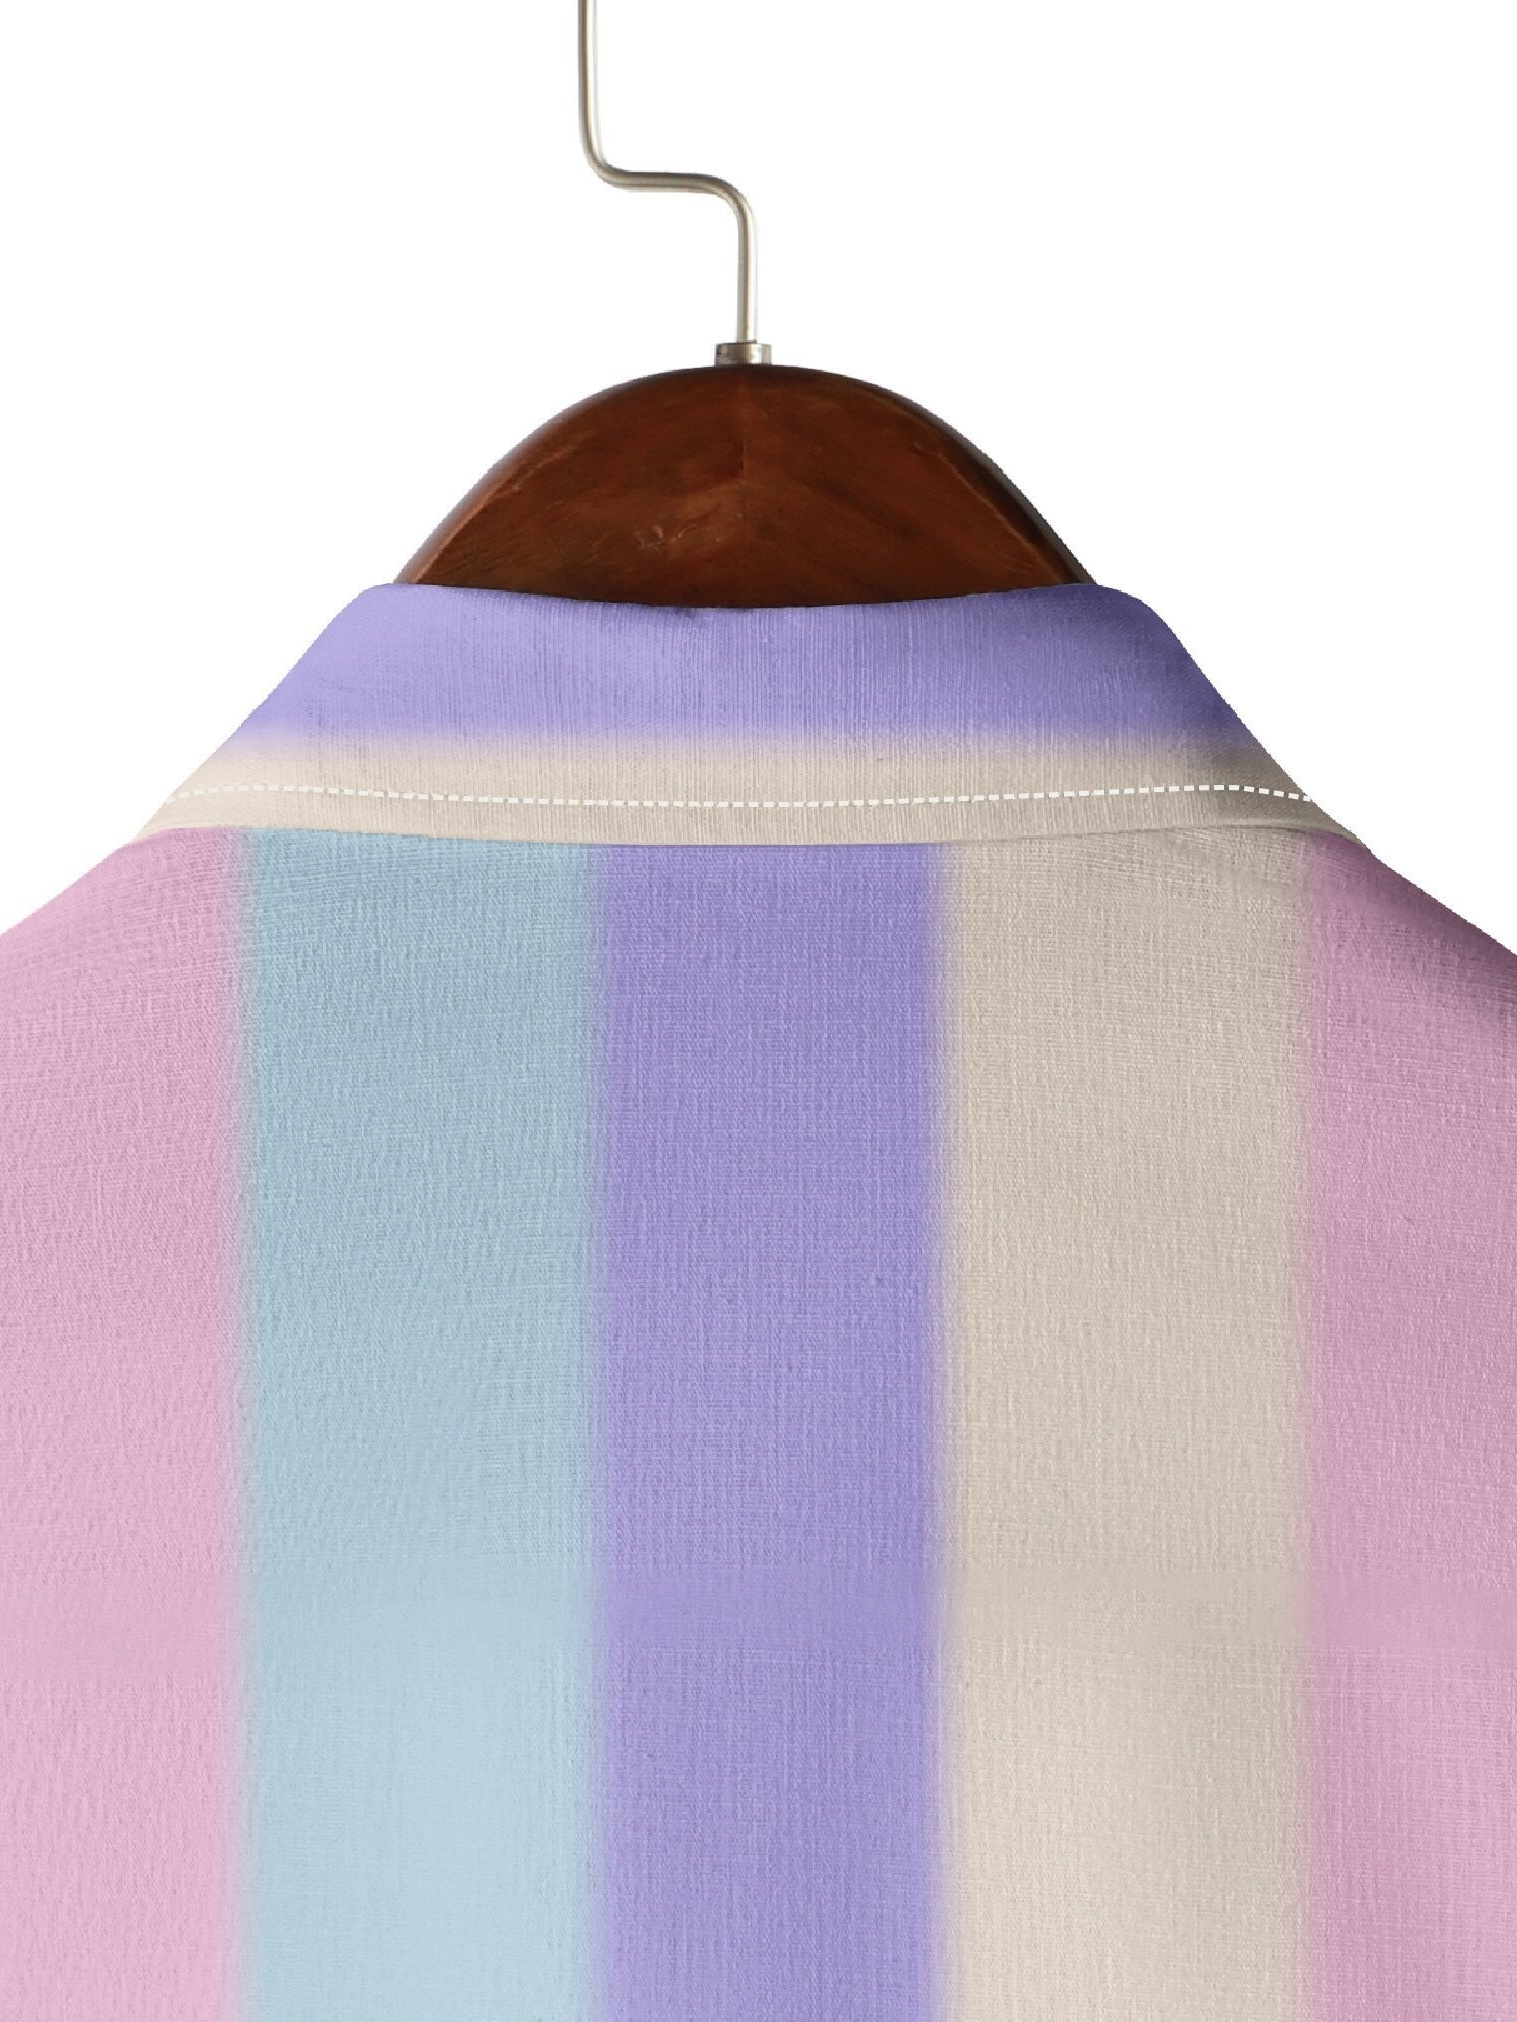 Multicolored Pastel Colorblock Striped Shirt